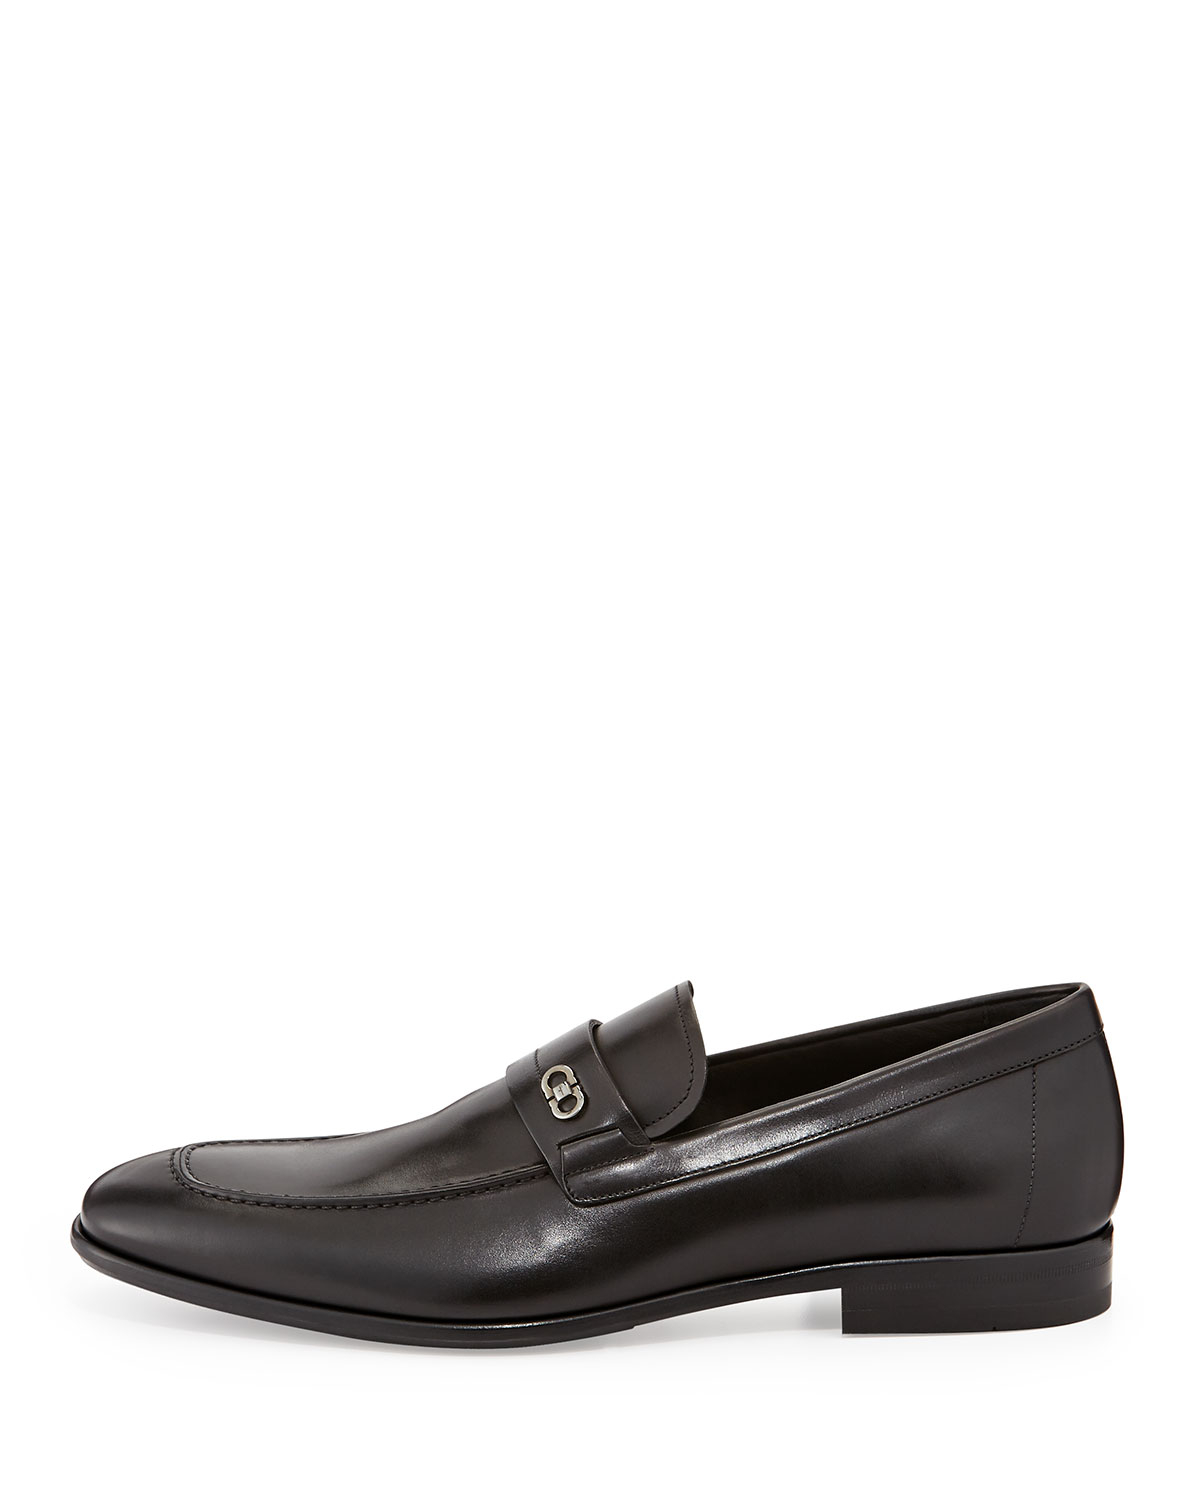 Lyst - Ferragamo Paros Leather Loafers in Black for Men